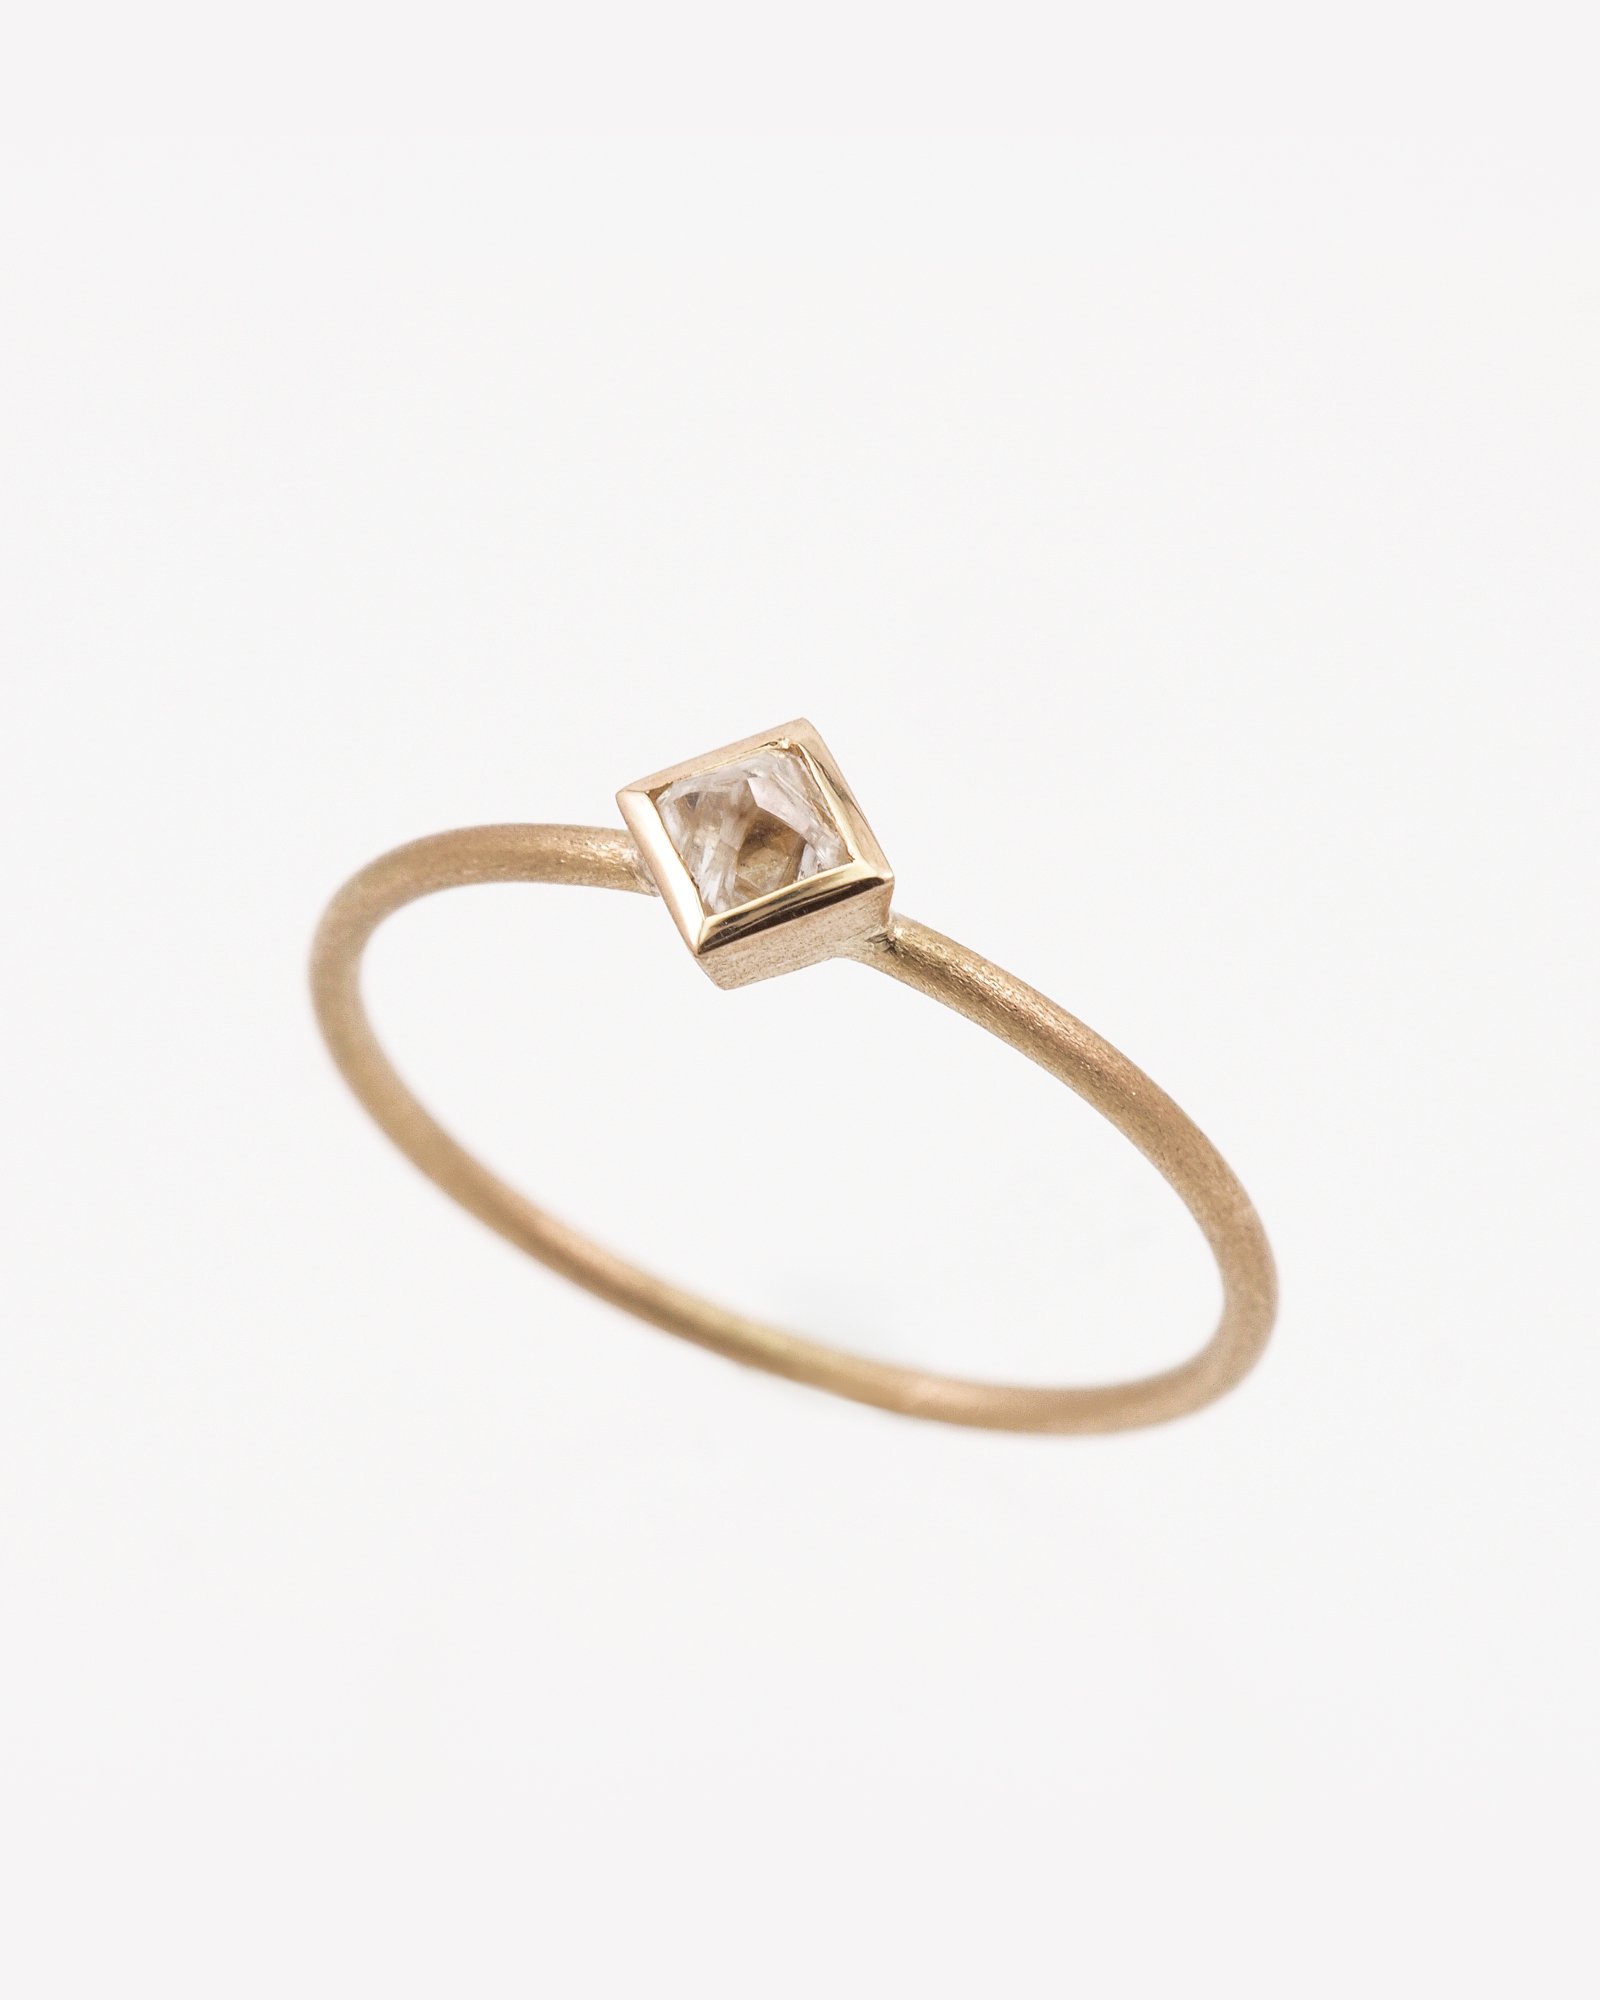 K18 Uncut Diamond Ring / Octahedron